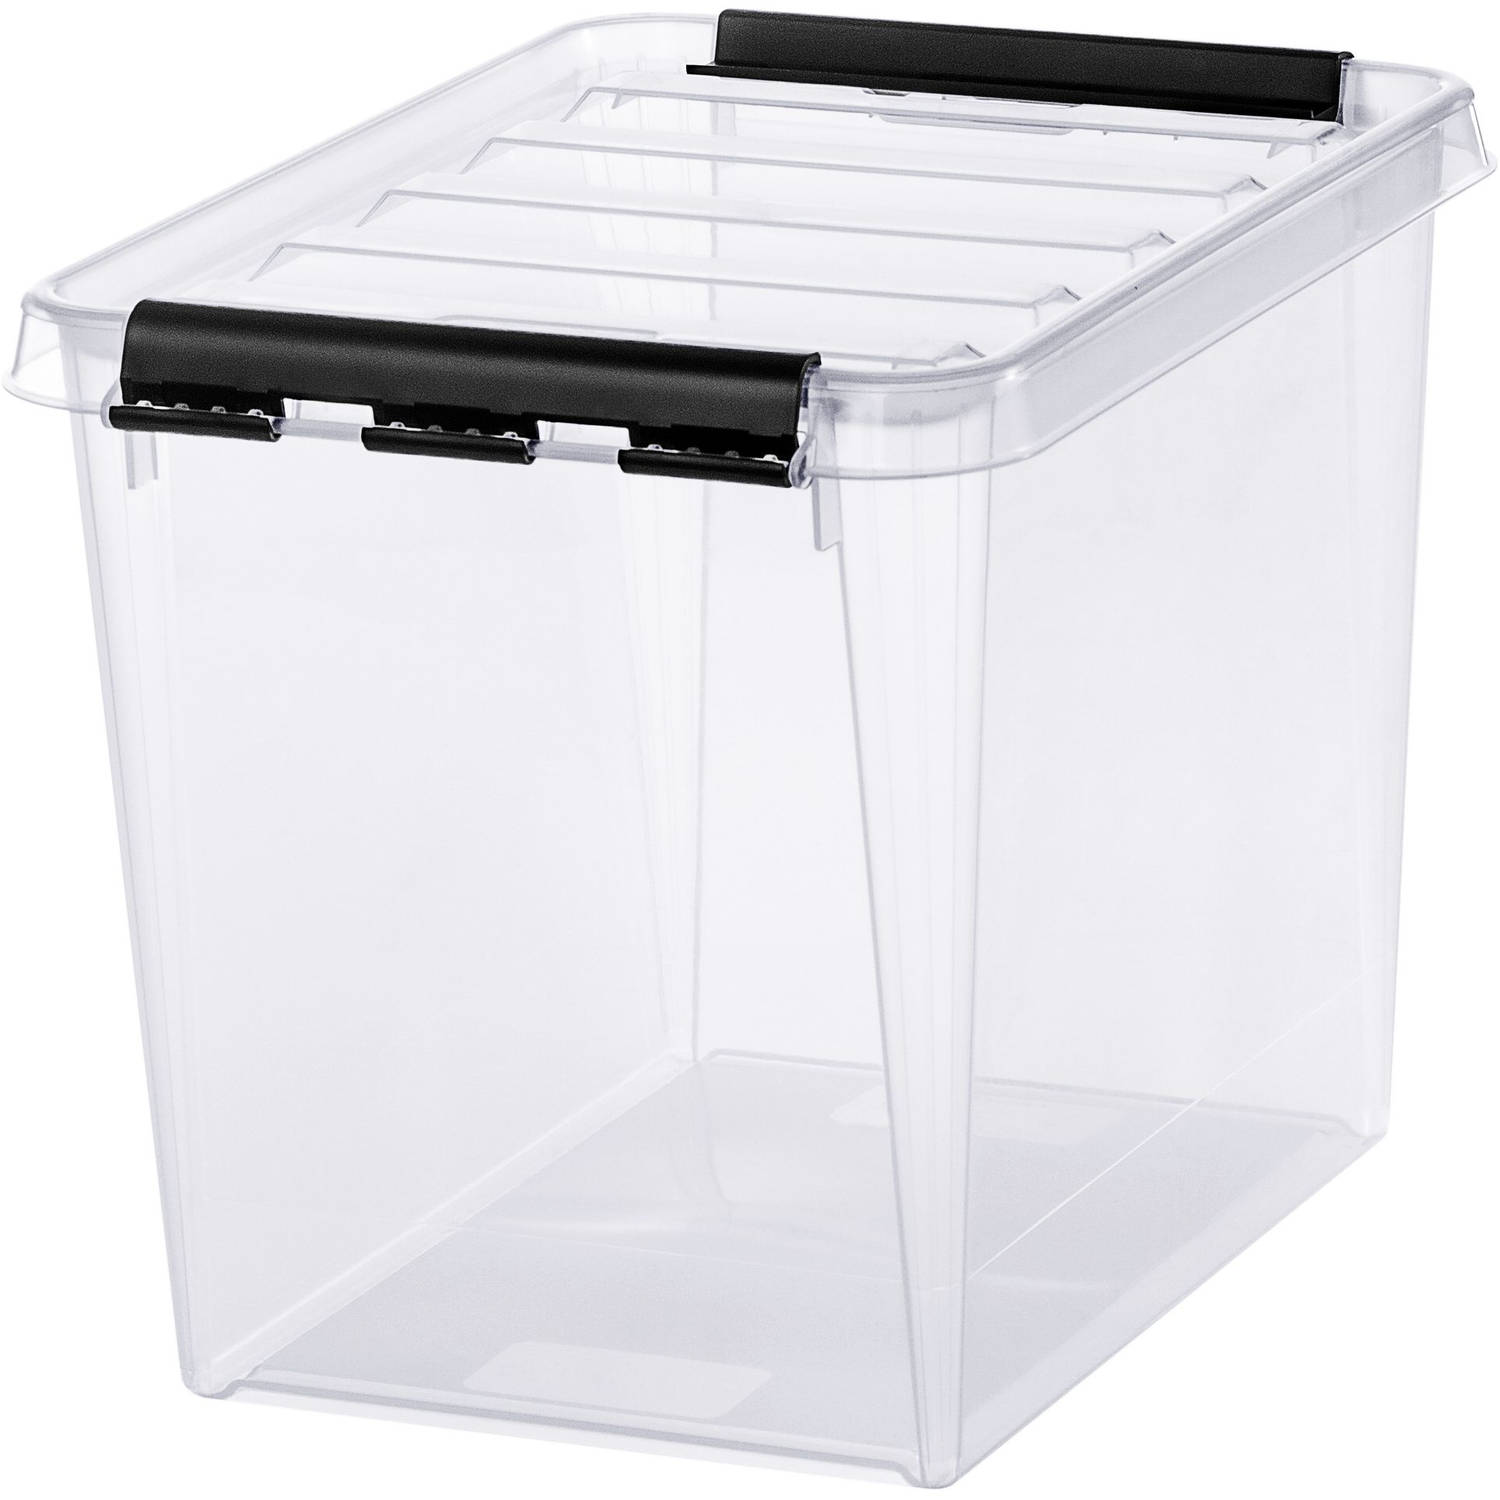 Orthex Opbergboxen met deksel 14 liter hoog - Transparant - Stapelbaar - 14 liter hoog (25 x 34 x 27 cm)